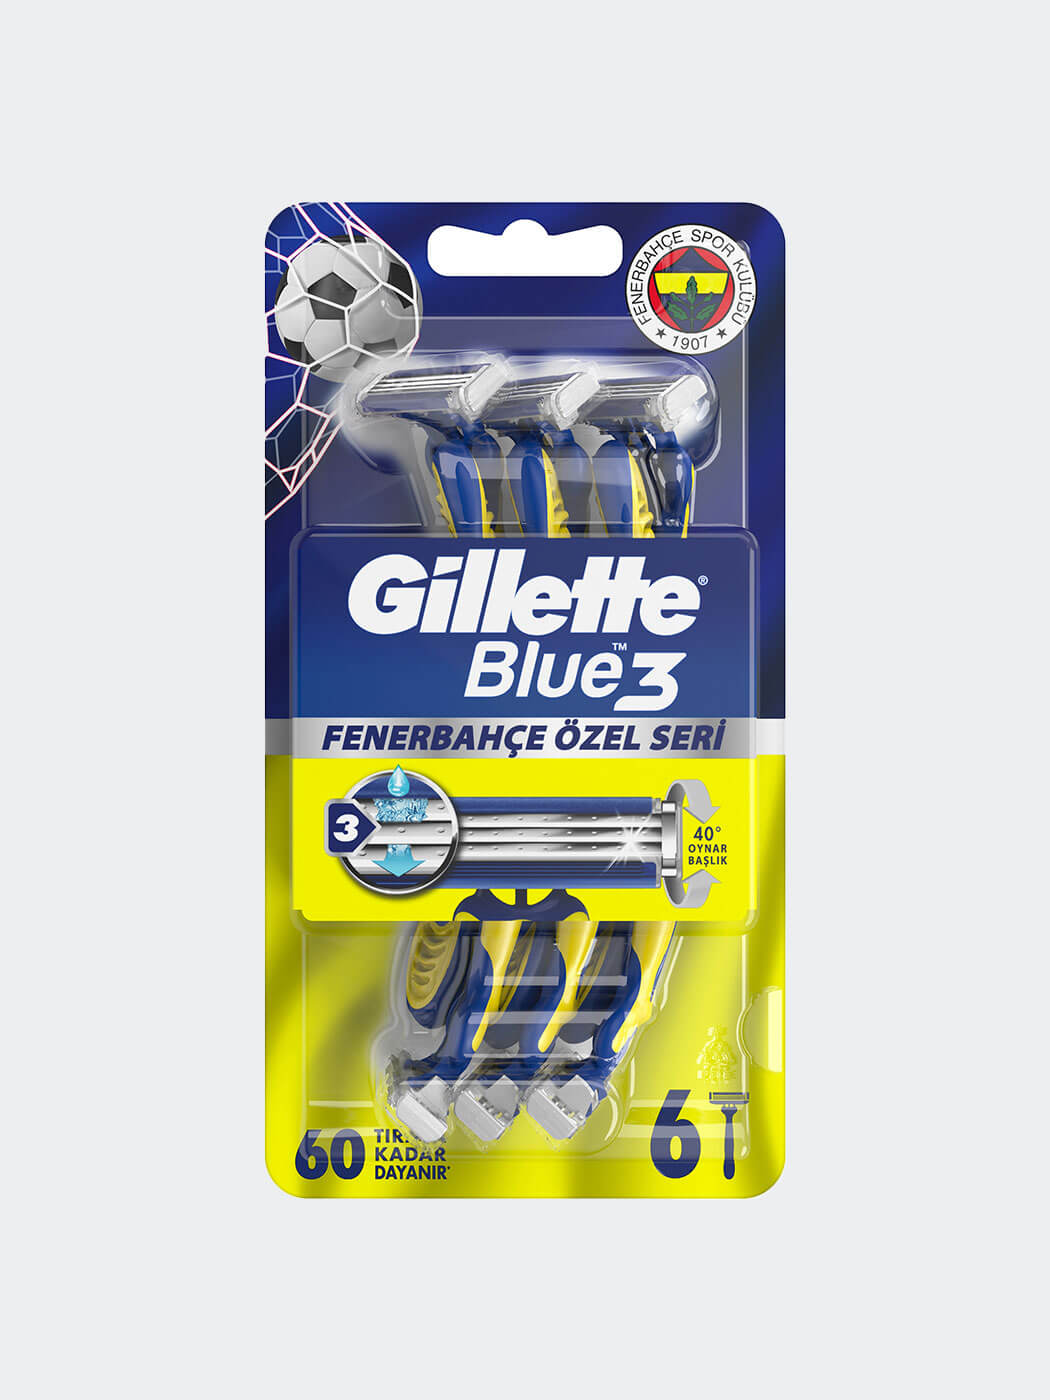 Gillette Blue 3 Fenerbahçe Taraftar Paketi 6'lı